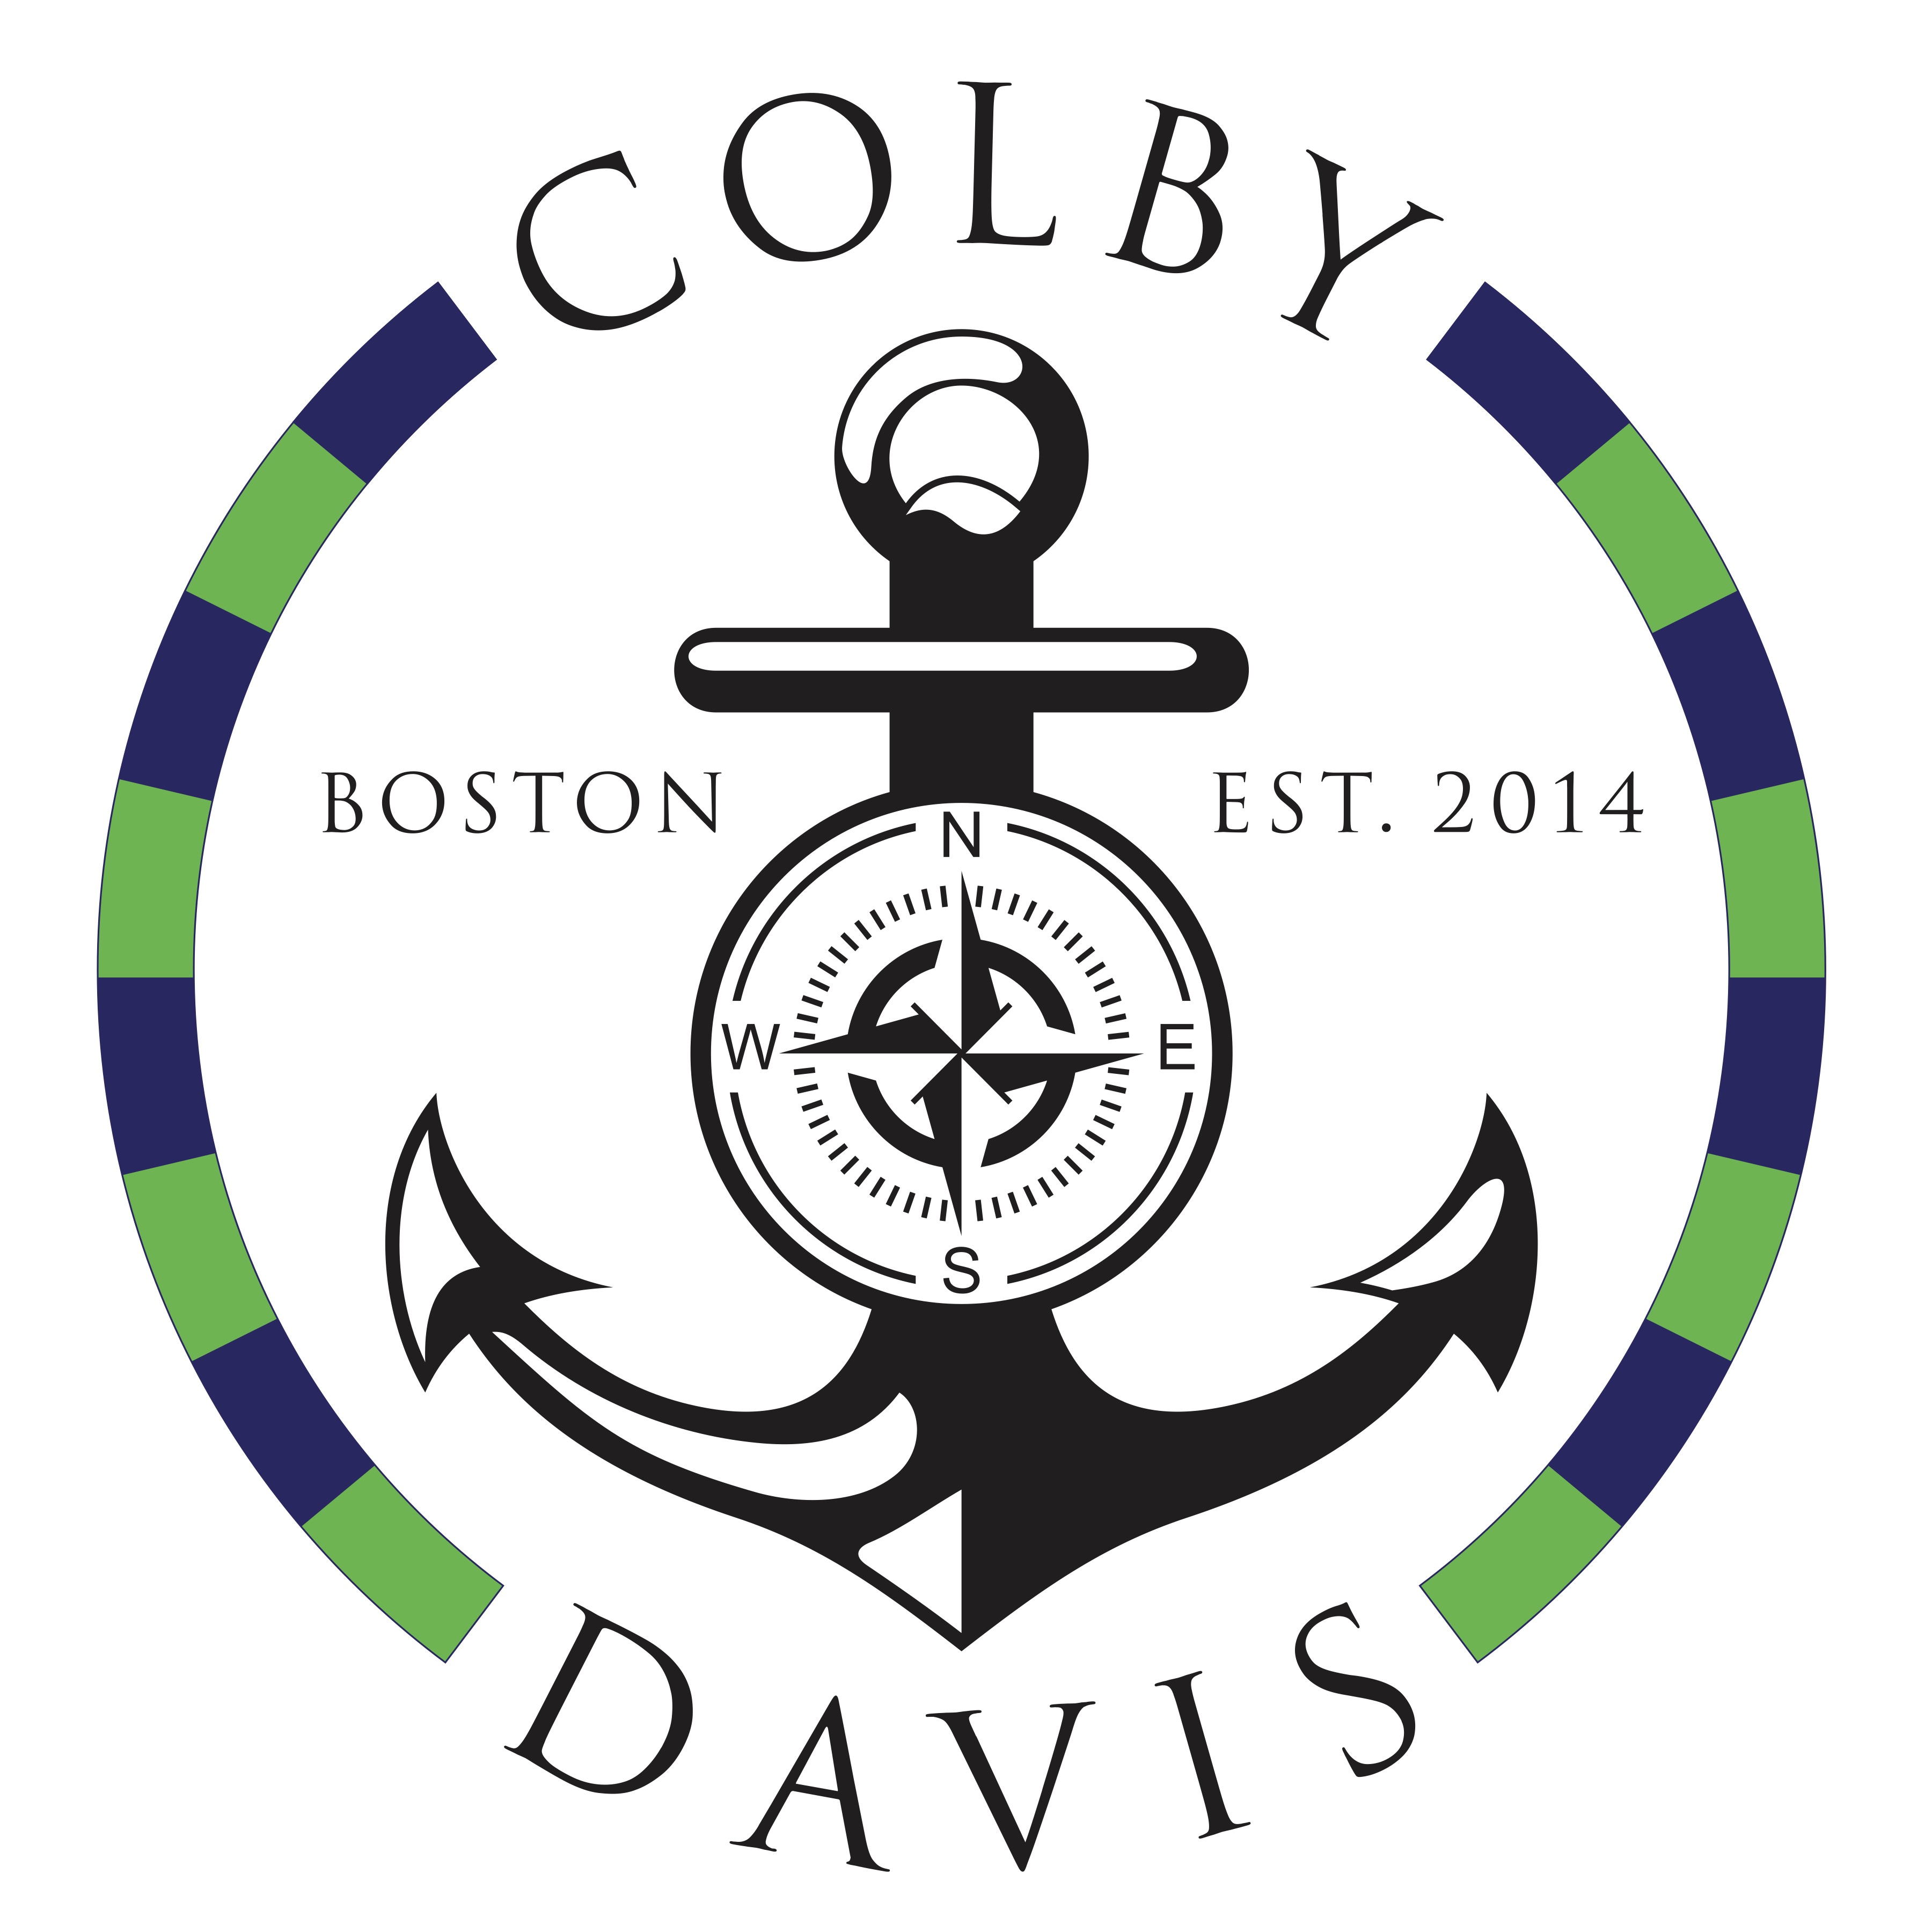 colby-davis-logo2.jpeg